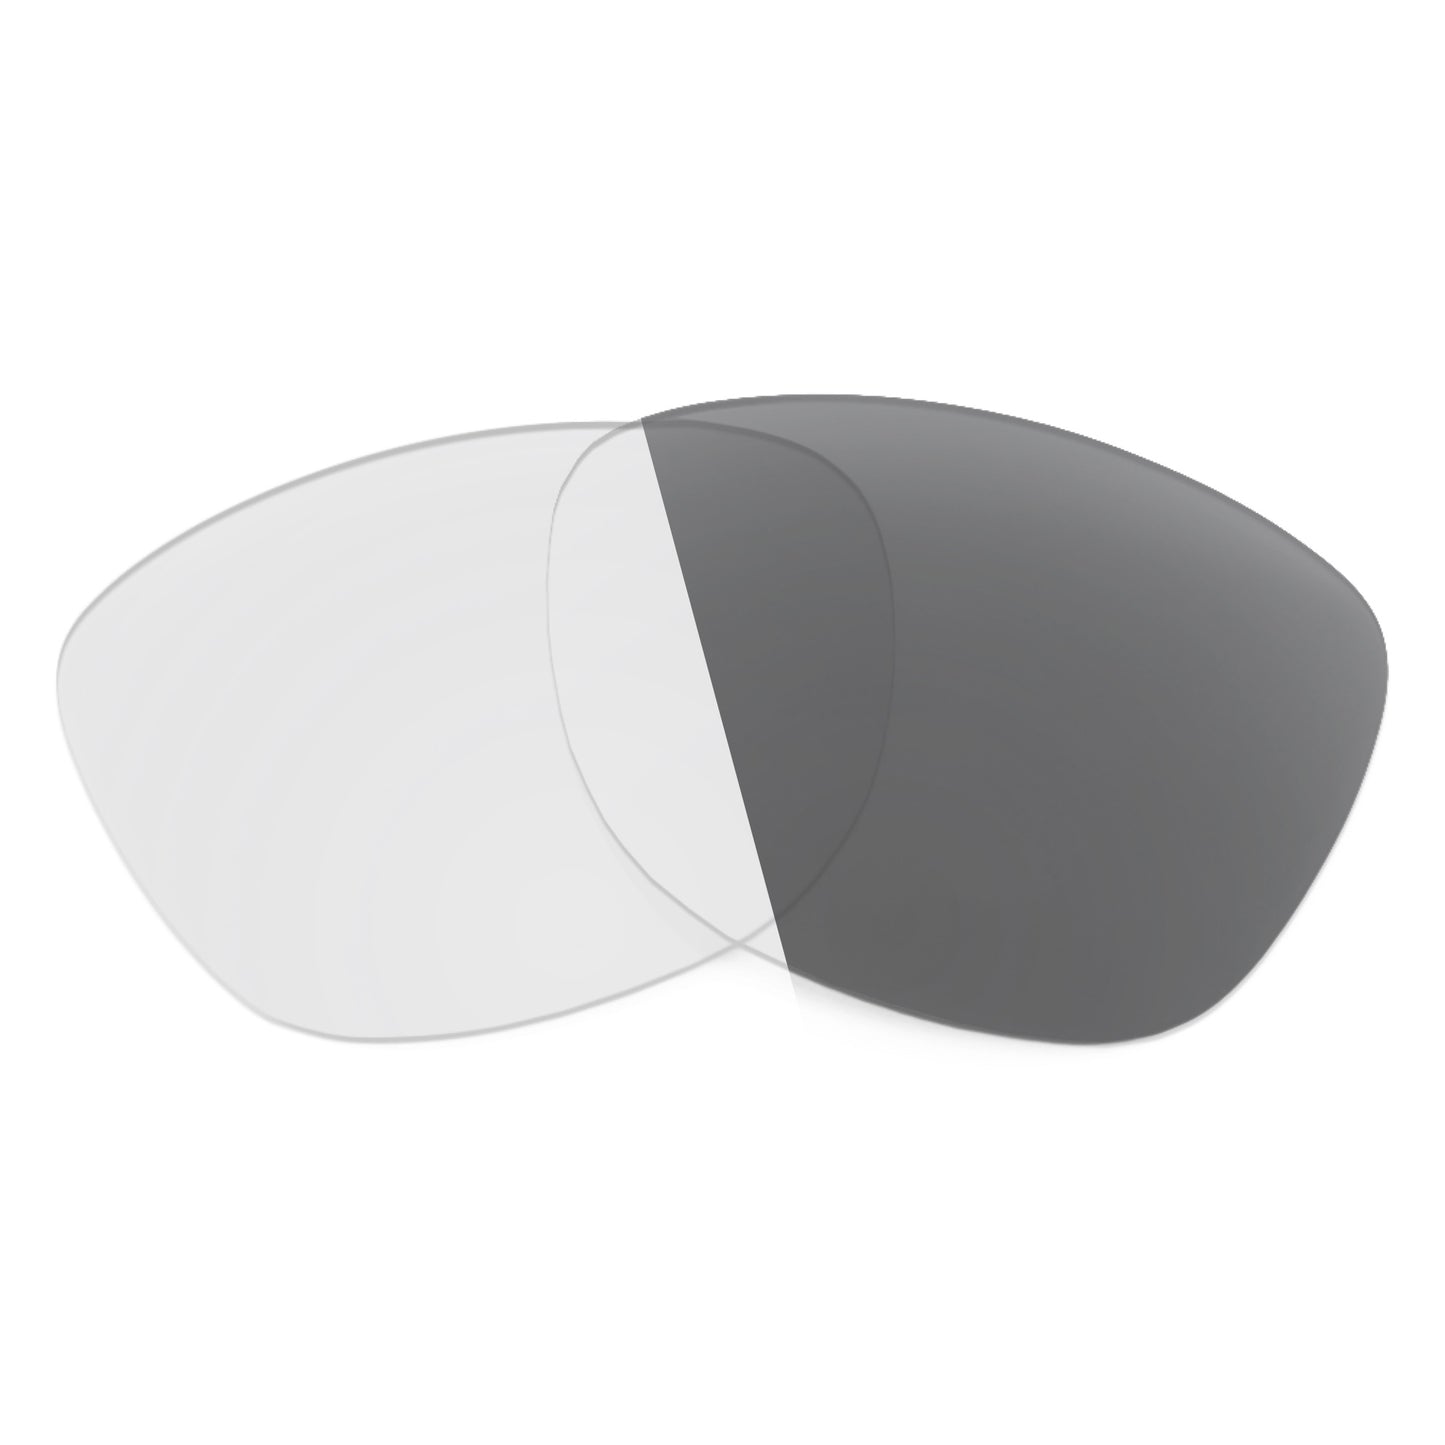 Revant replacement lenses for Maui Jim Mongoose MJ540 Non-Polarized Adapt Gray Photochromic